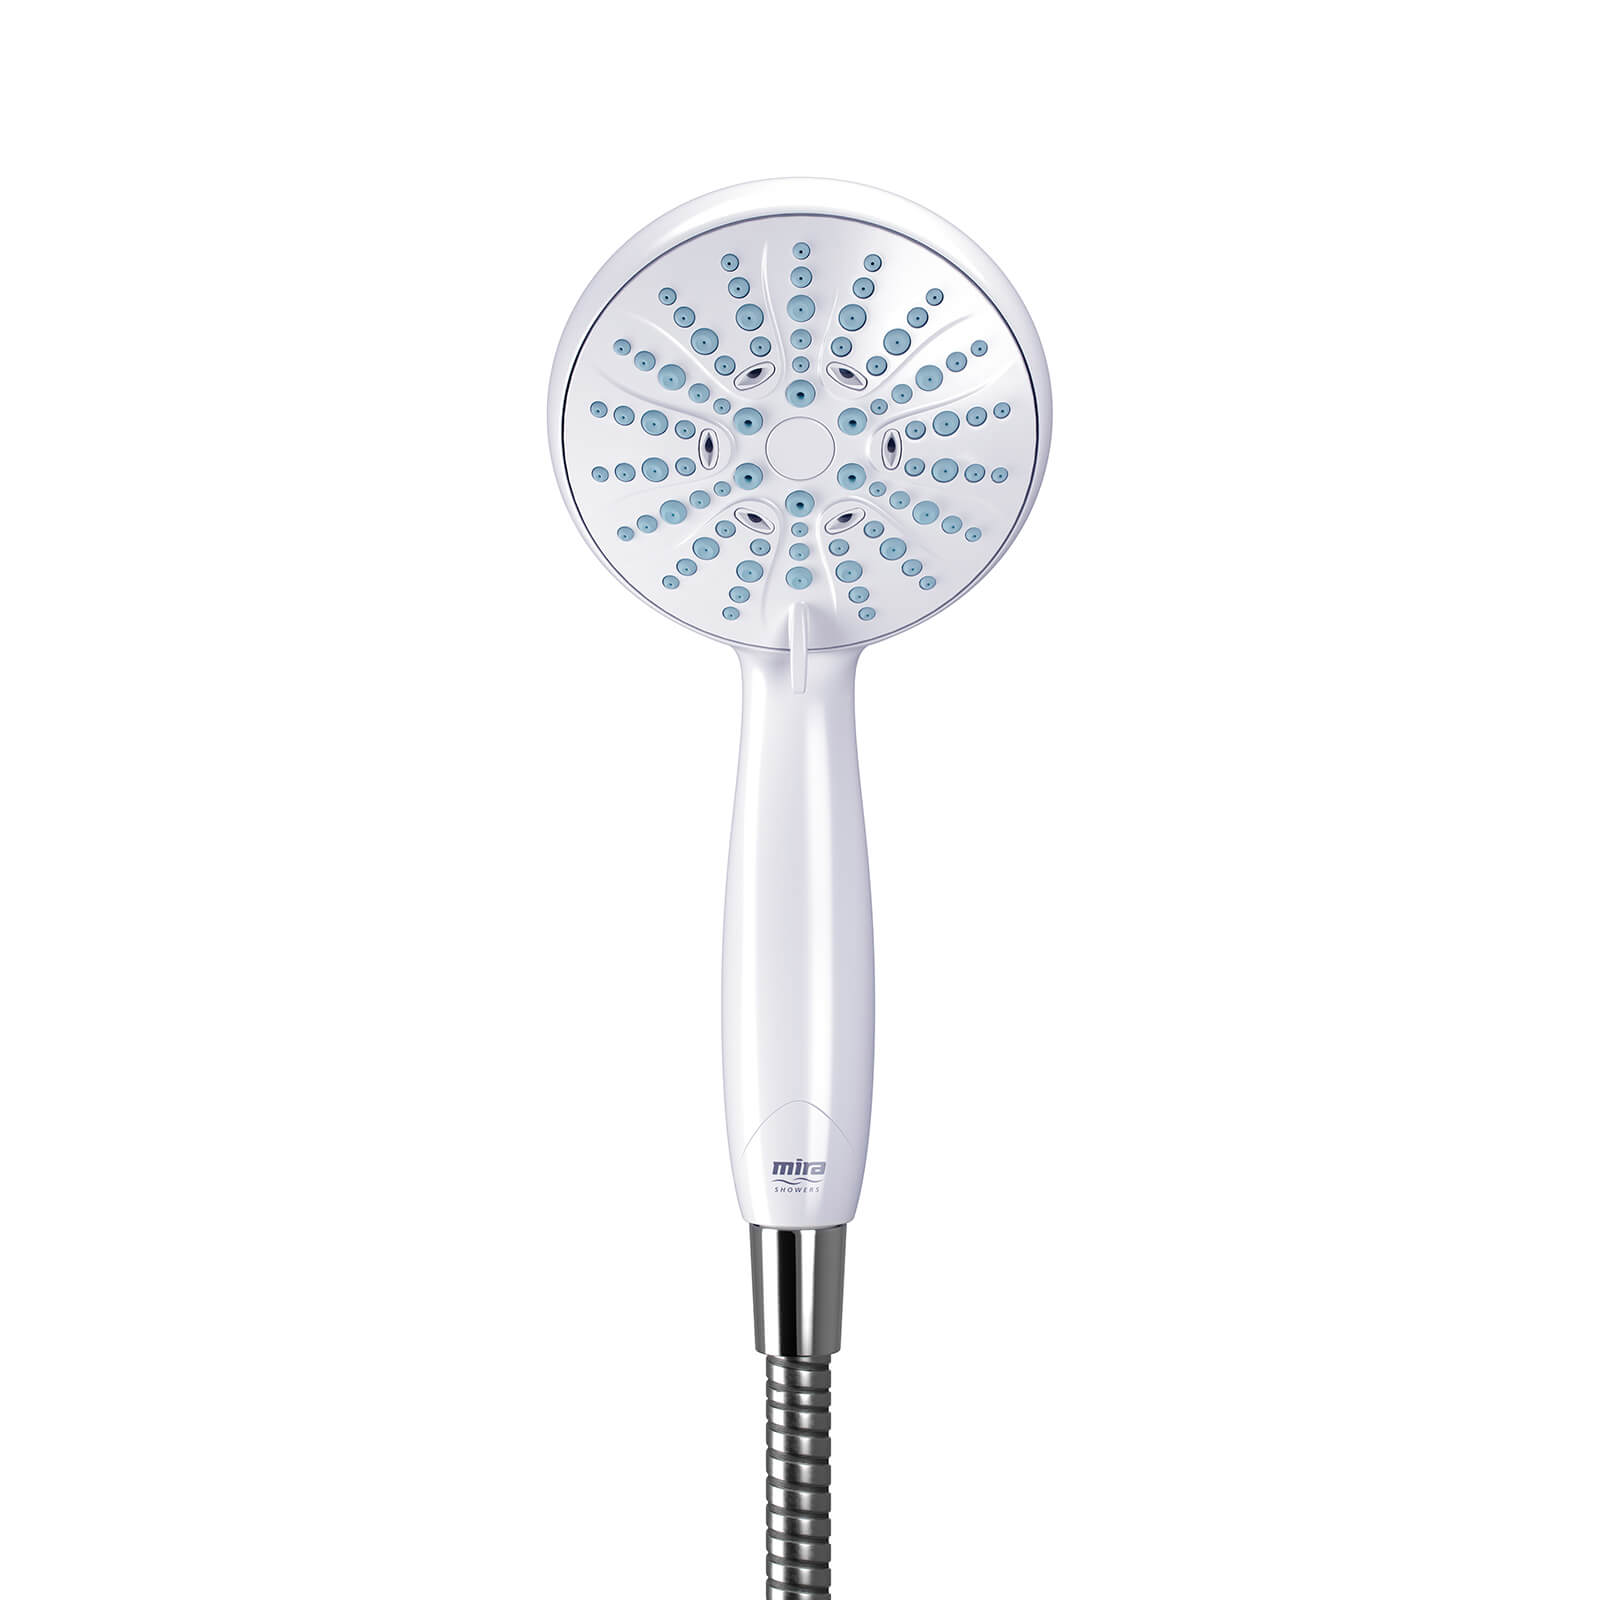 Mira Sprint 8.5kW Electric Shower - White